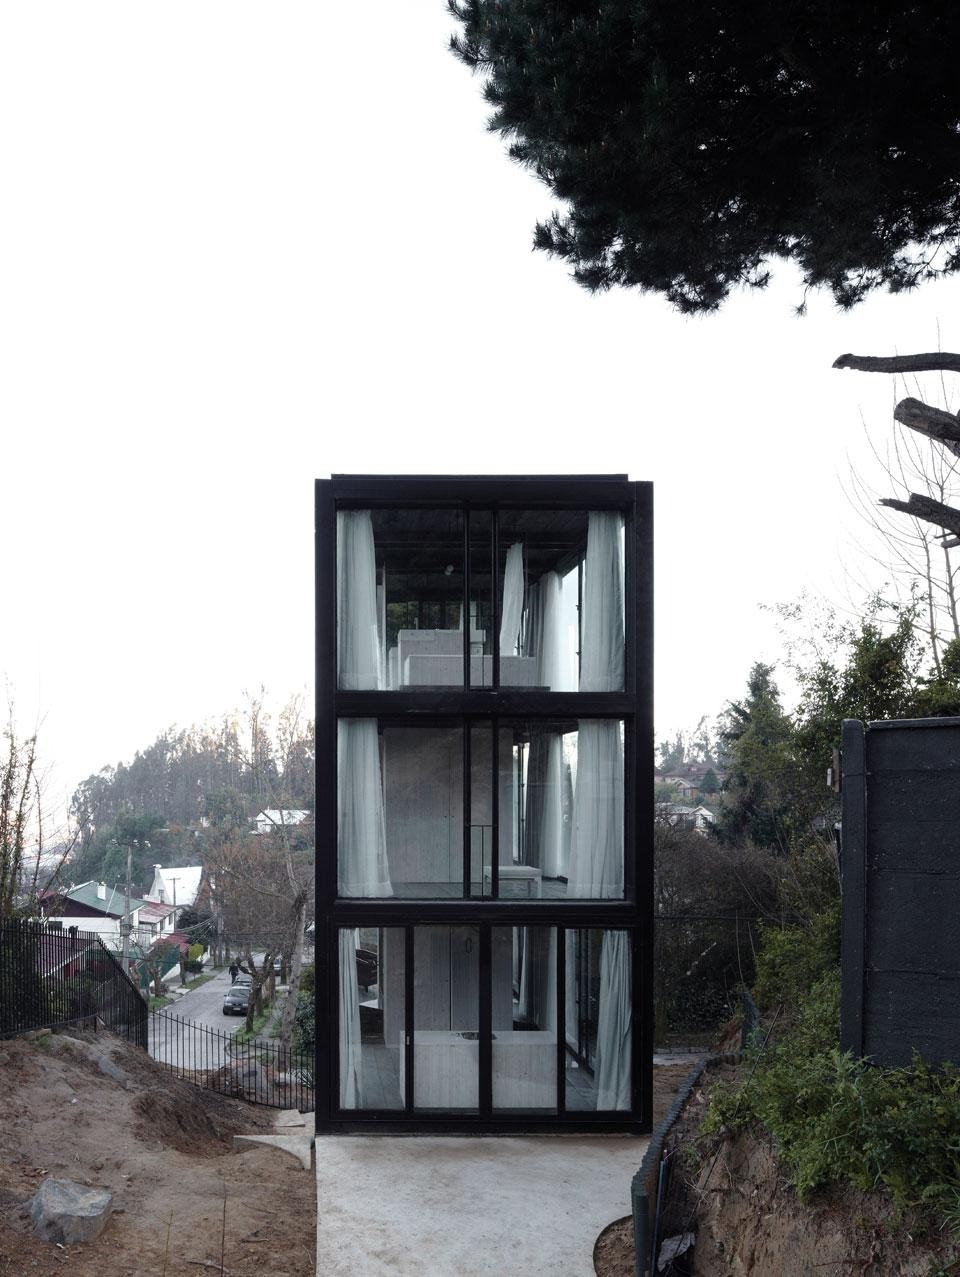 Pezo von Ellrichshausen, <em>Arco House</em>, Concepción, Chile